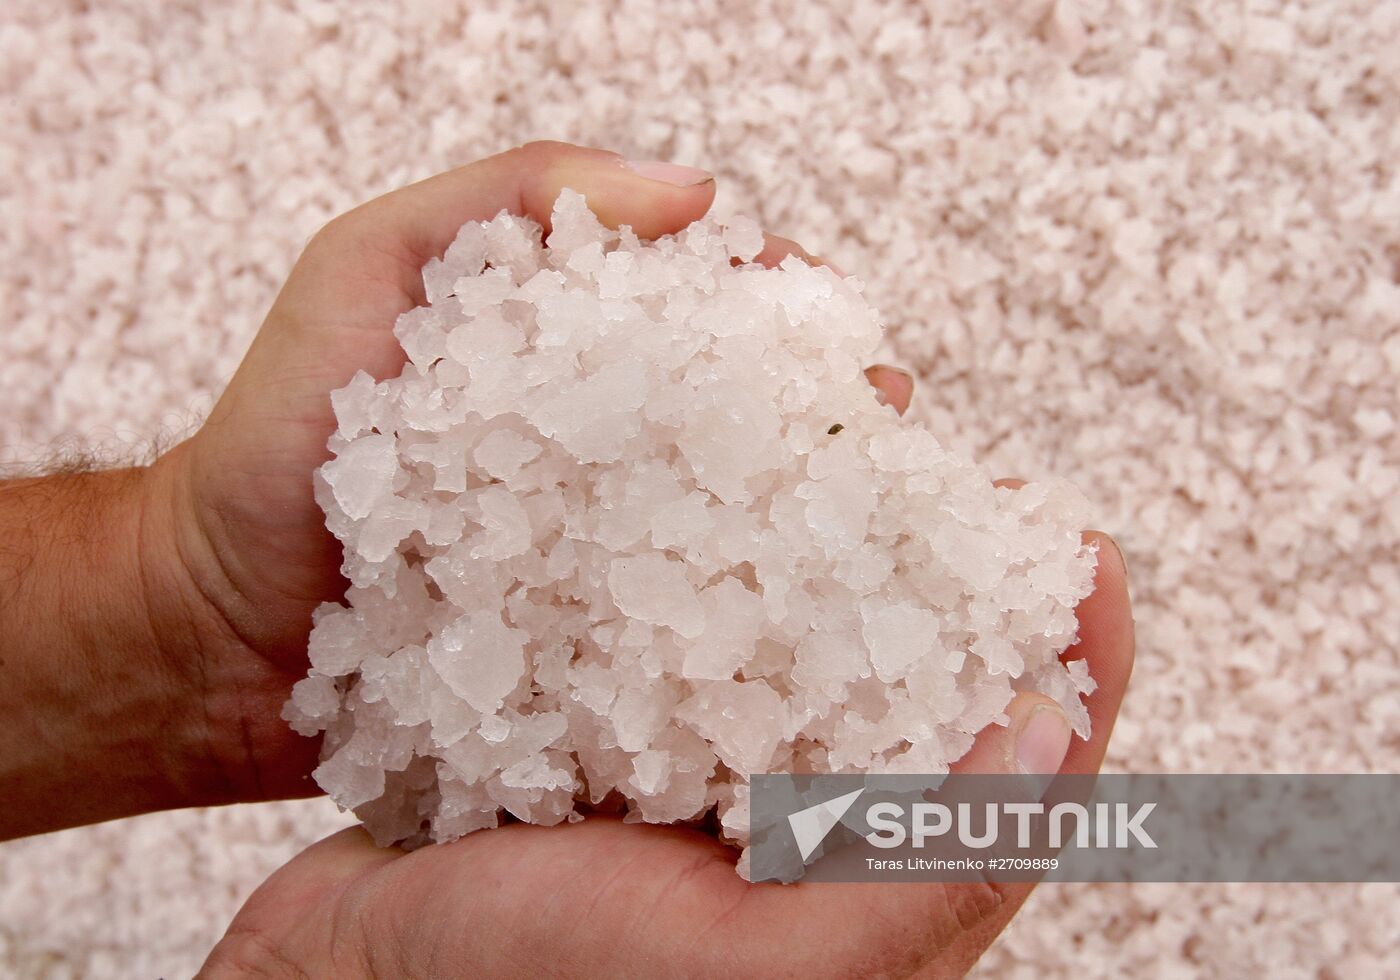 Salt extraxtion in Crimea